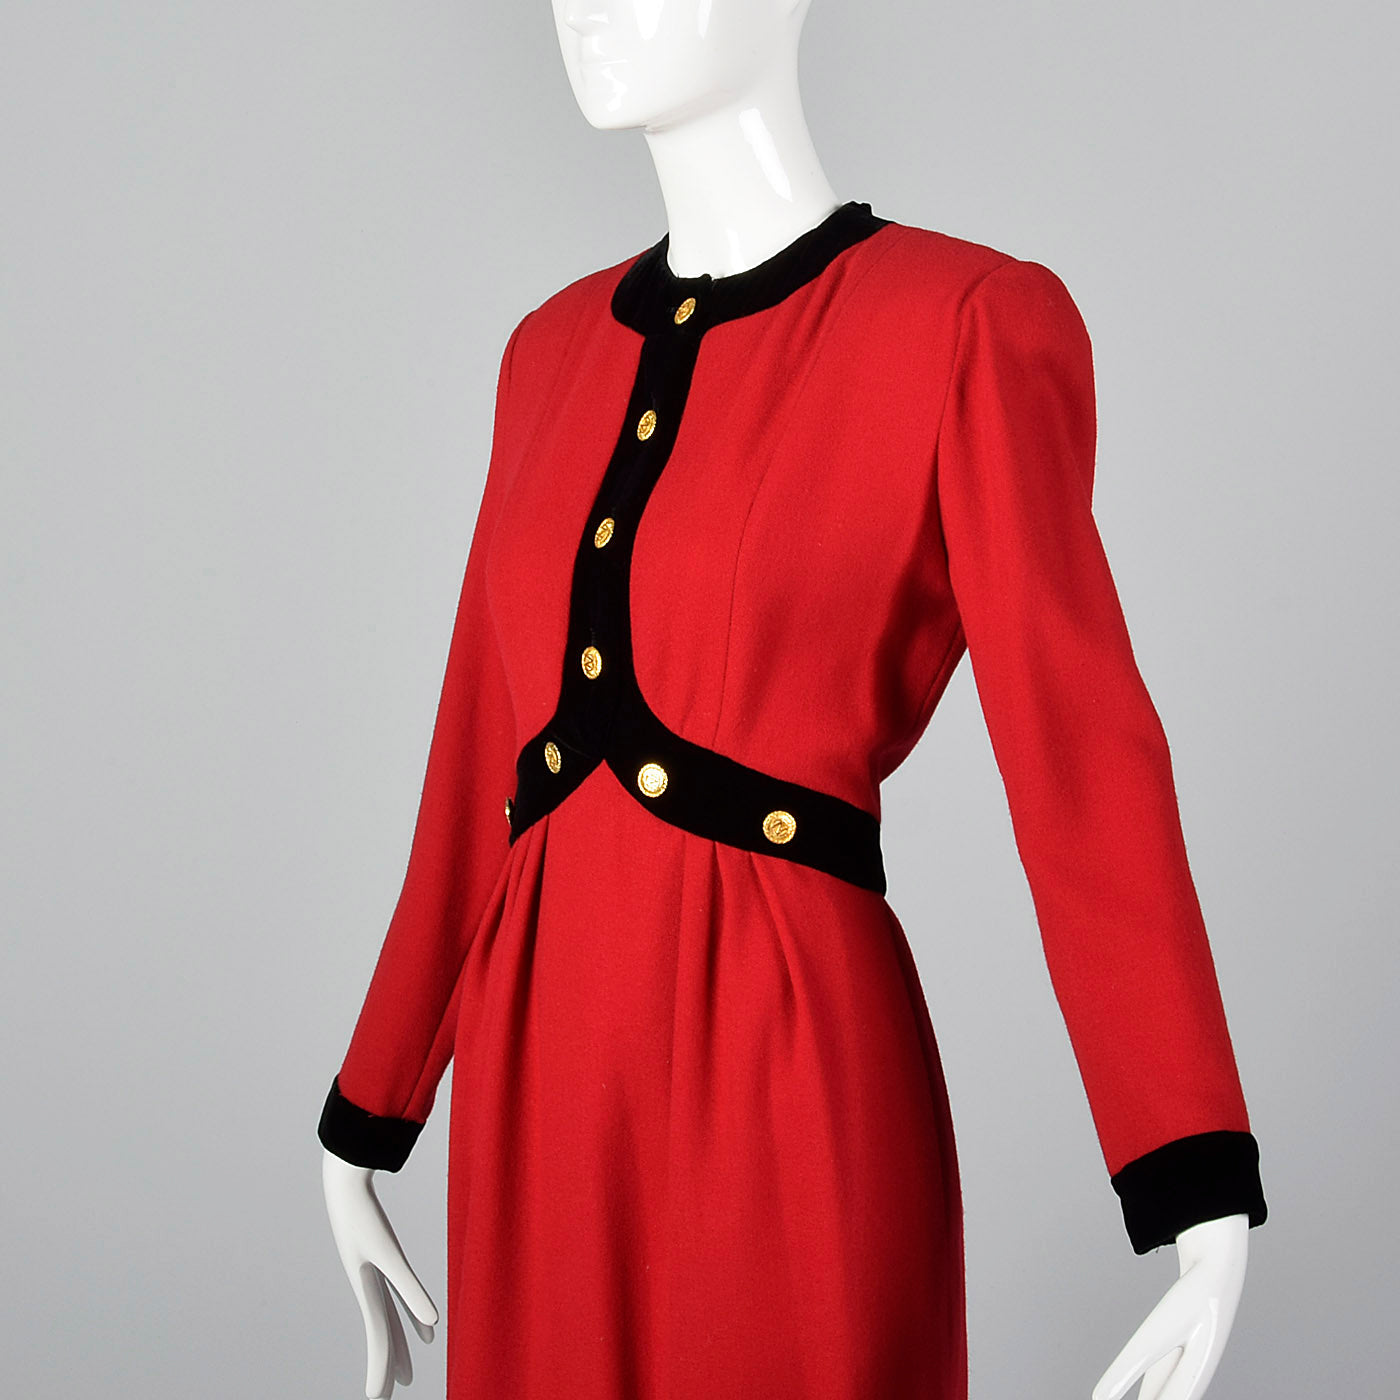 1980s Red Wool Dress with Black Velvet Trim